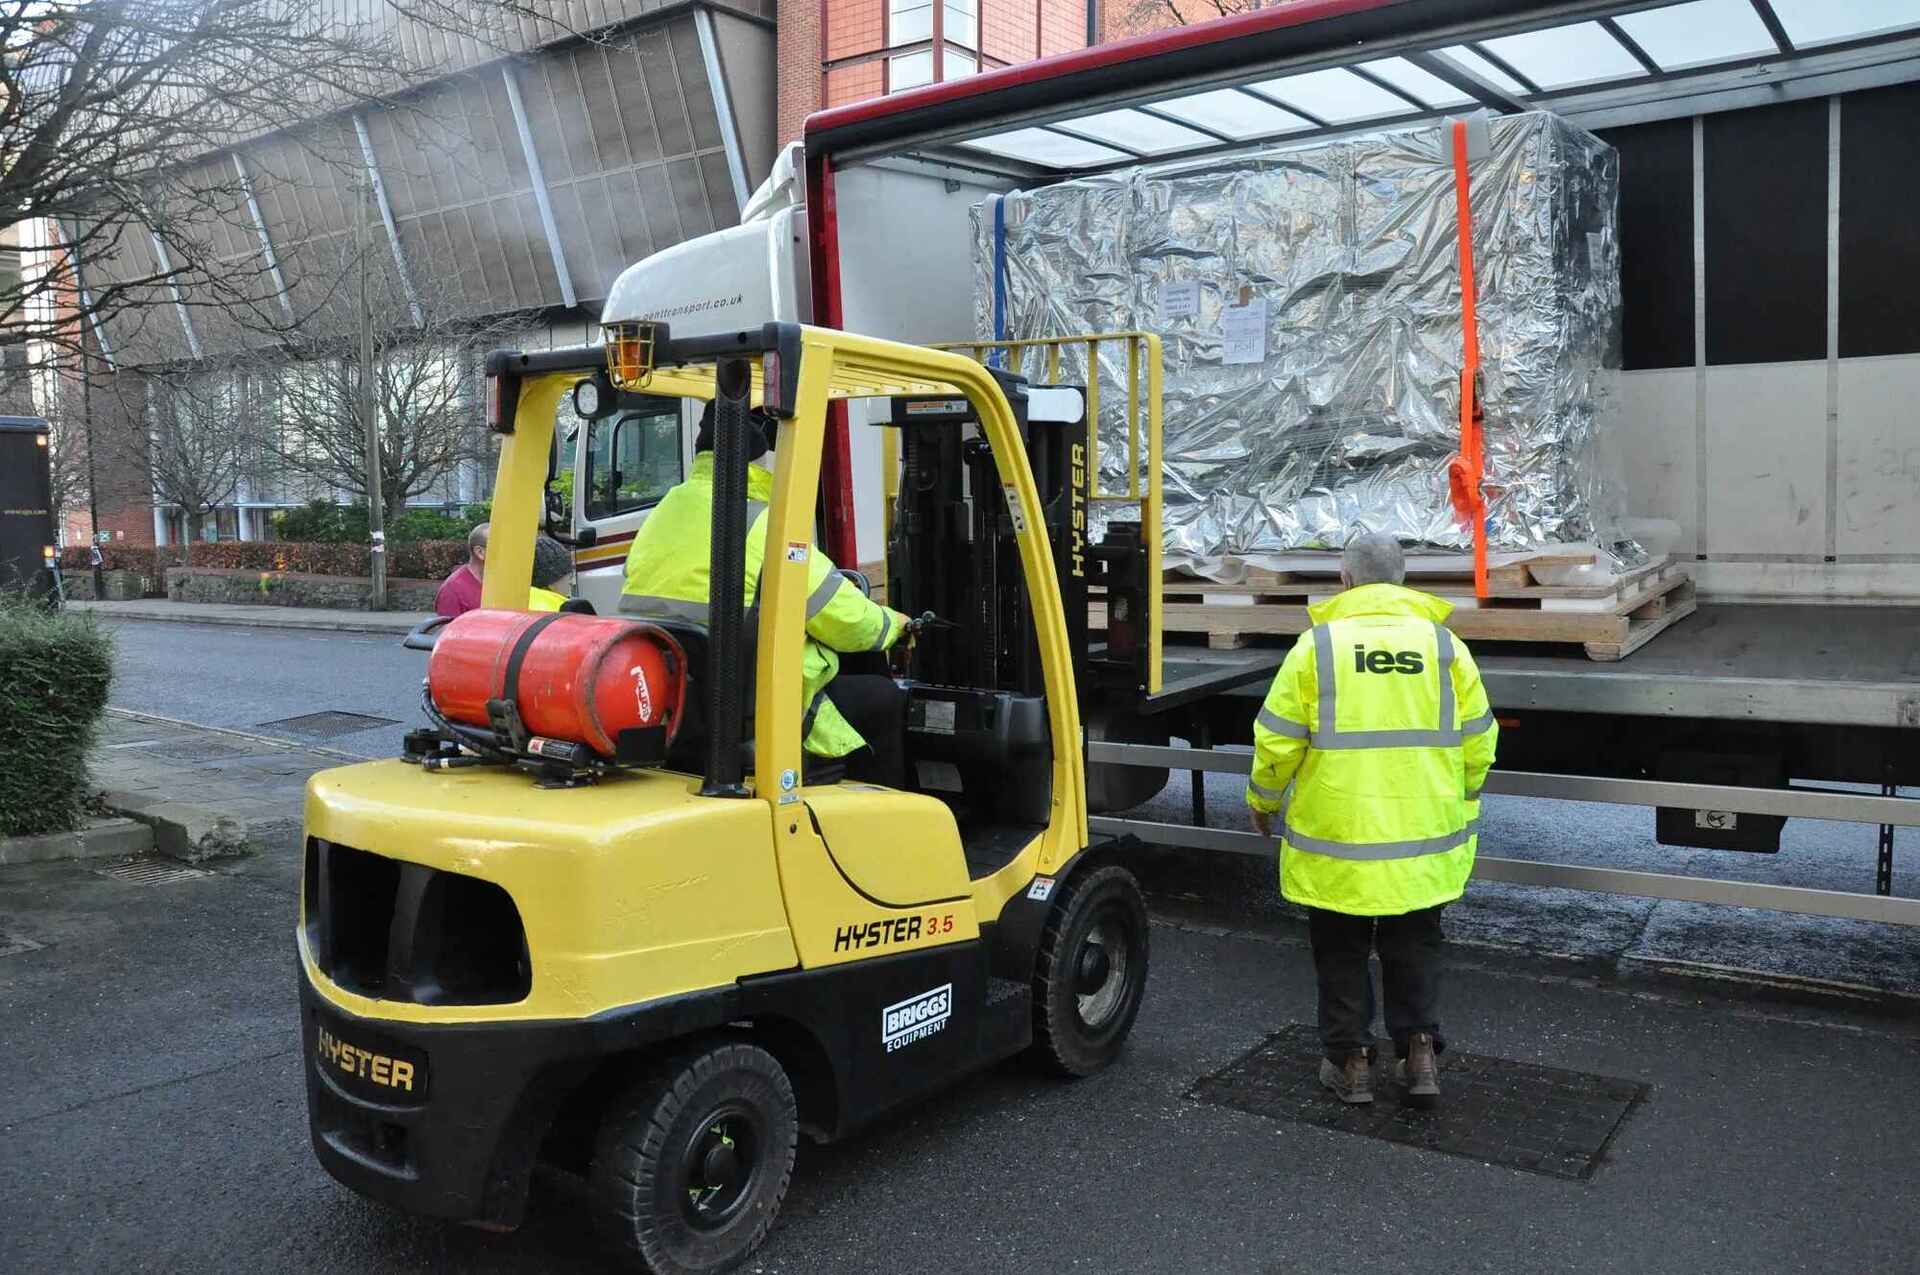 Bristol-Uni-equipment-install-technology-mocvd-crate-unload